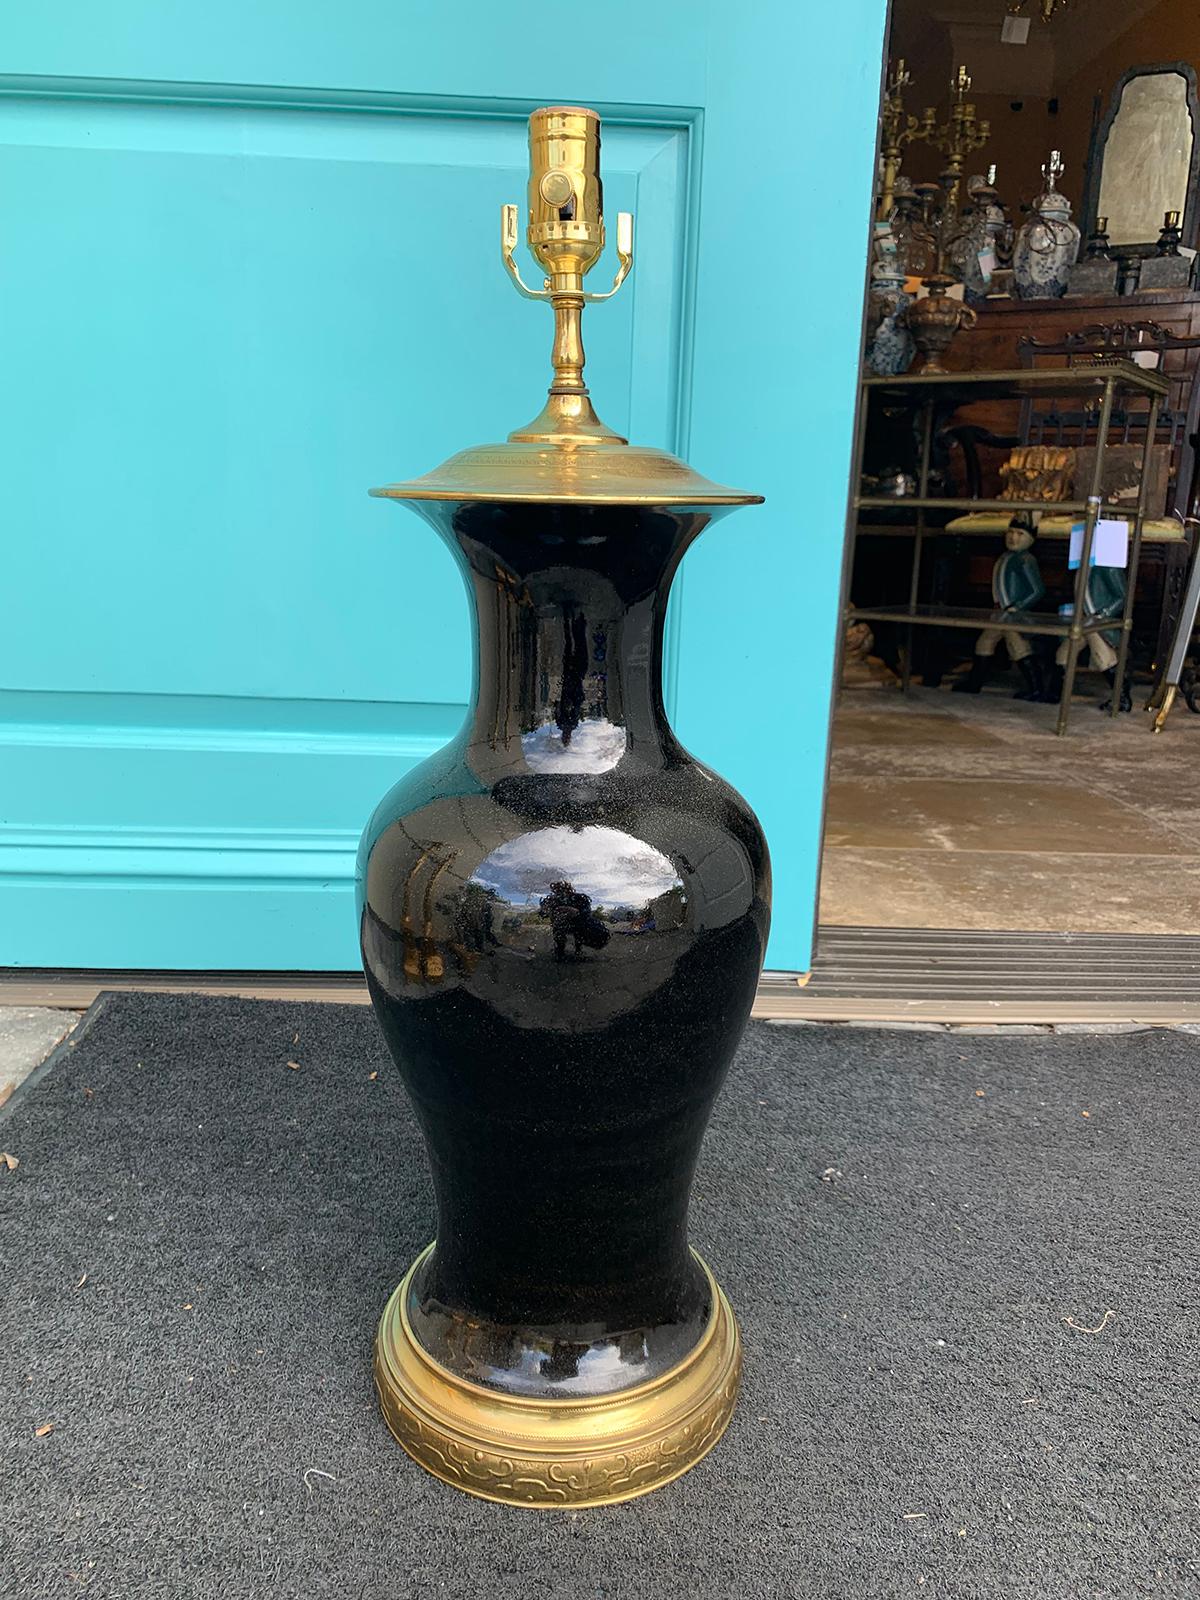 19th century Chinese mirror black porcelain lamp, custom brass mount.
Brand new wiring.